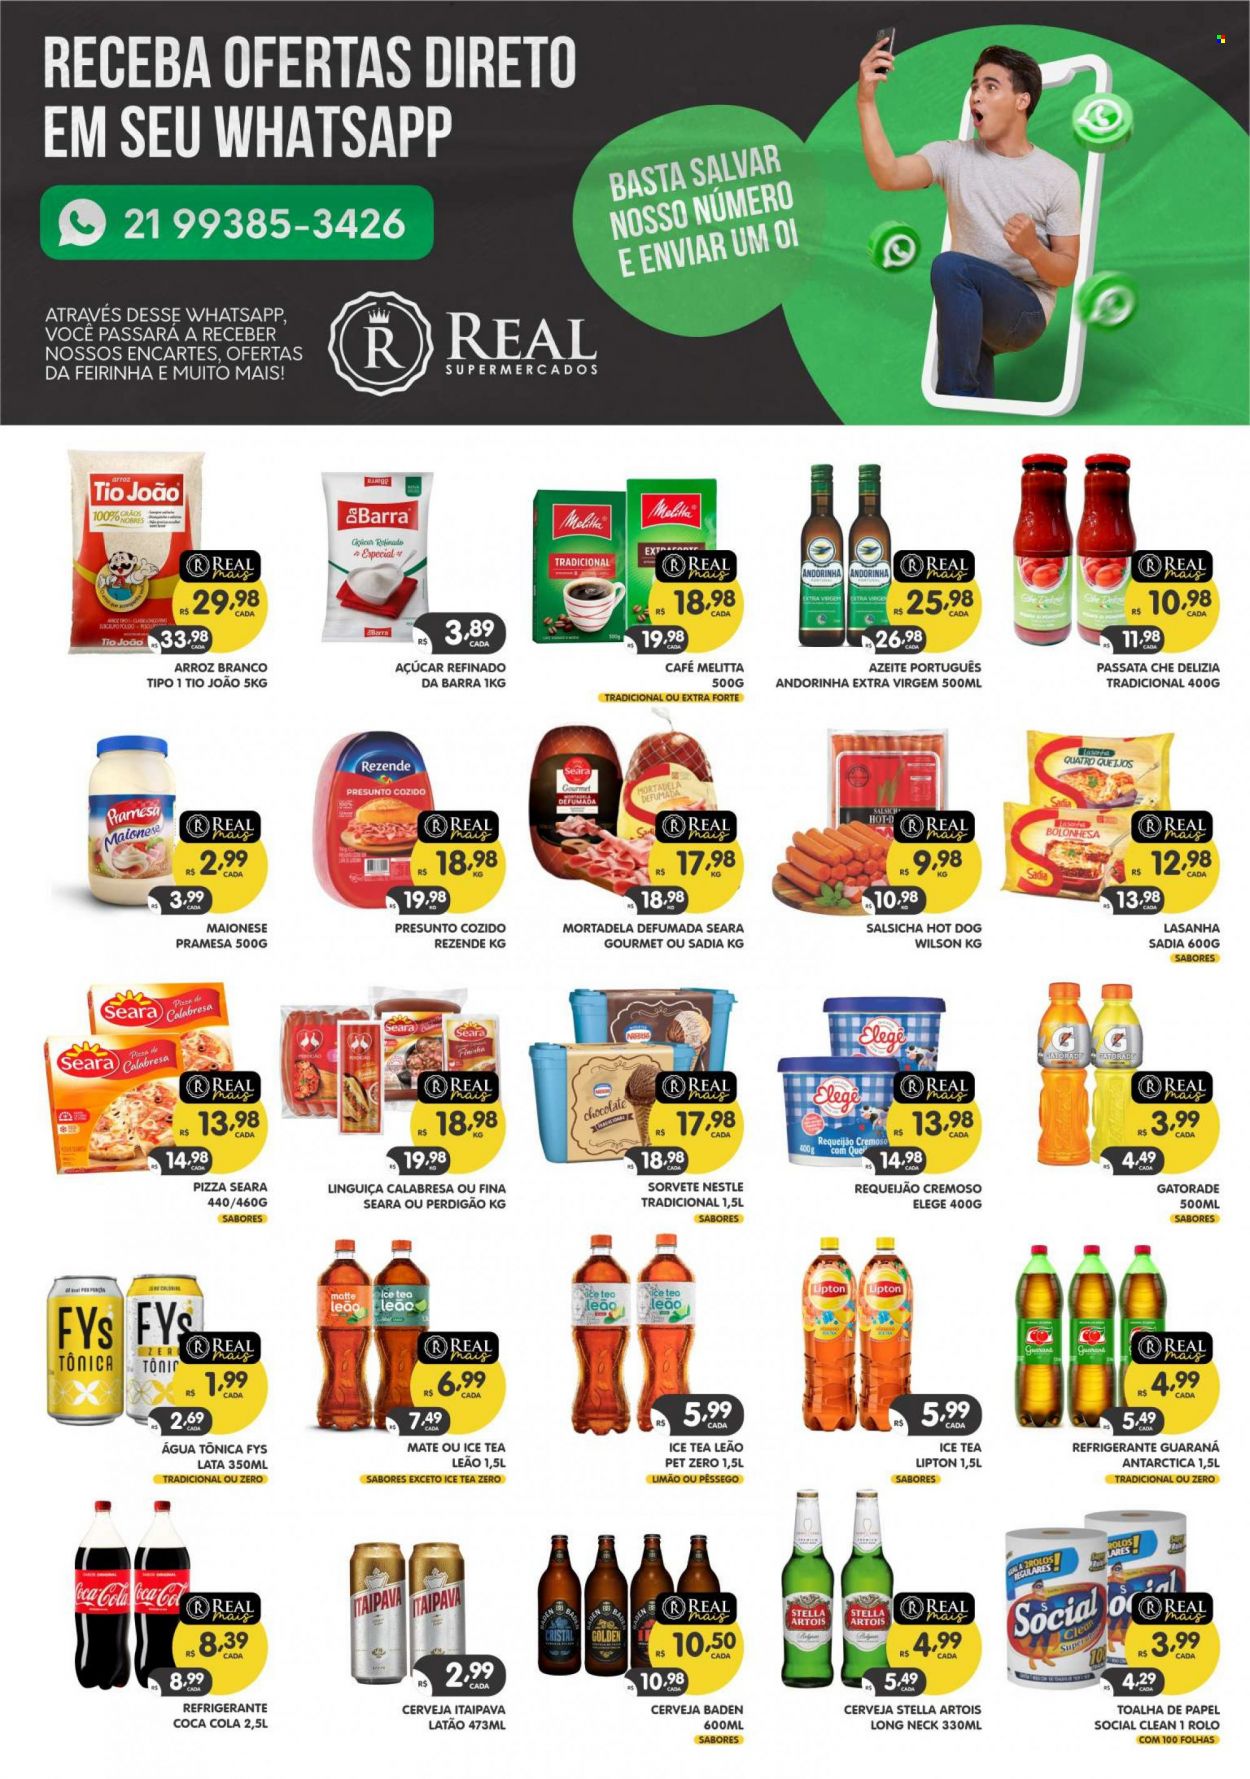 Encarte Supermercados Real  - 01.02.2023 - 15.02.2023.